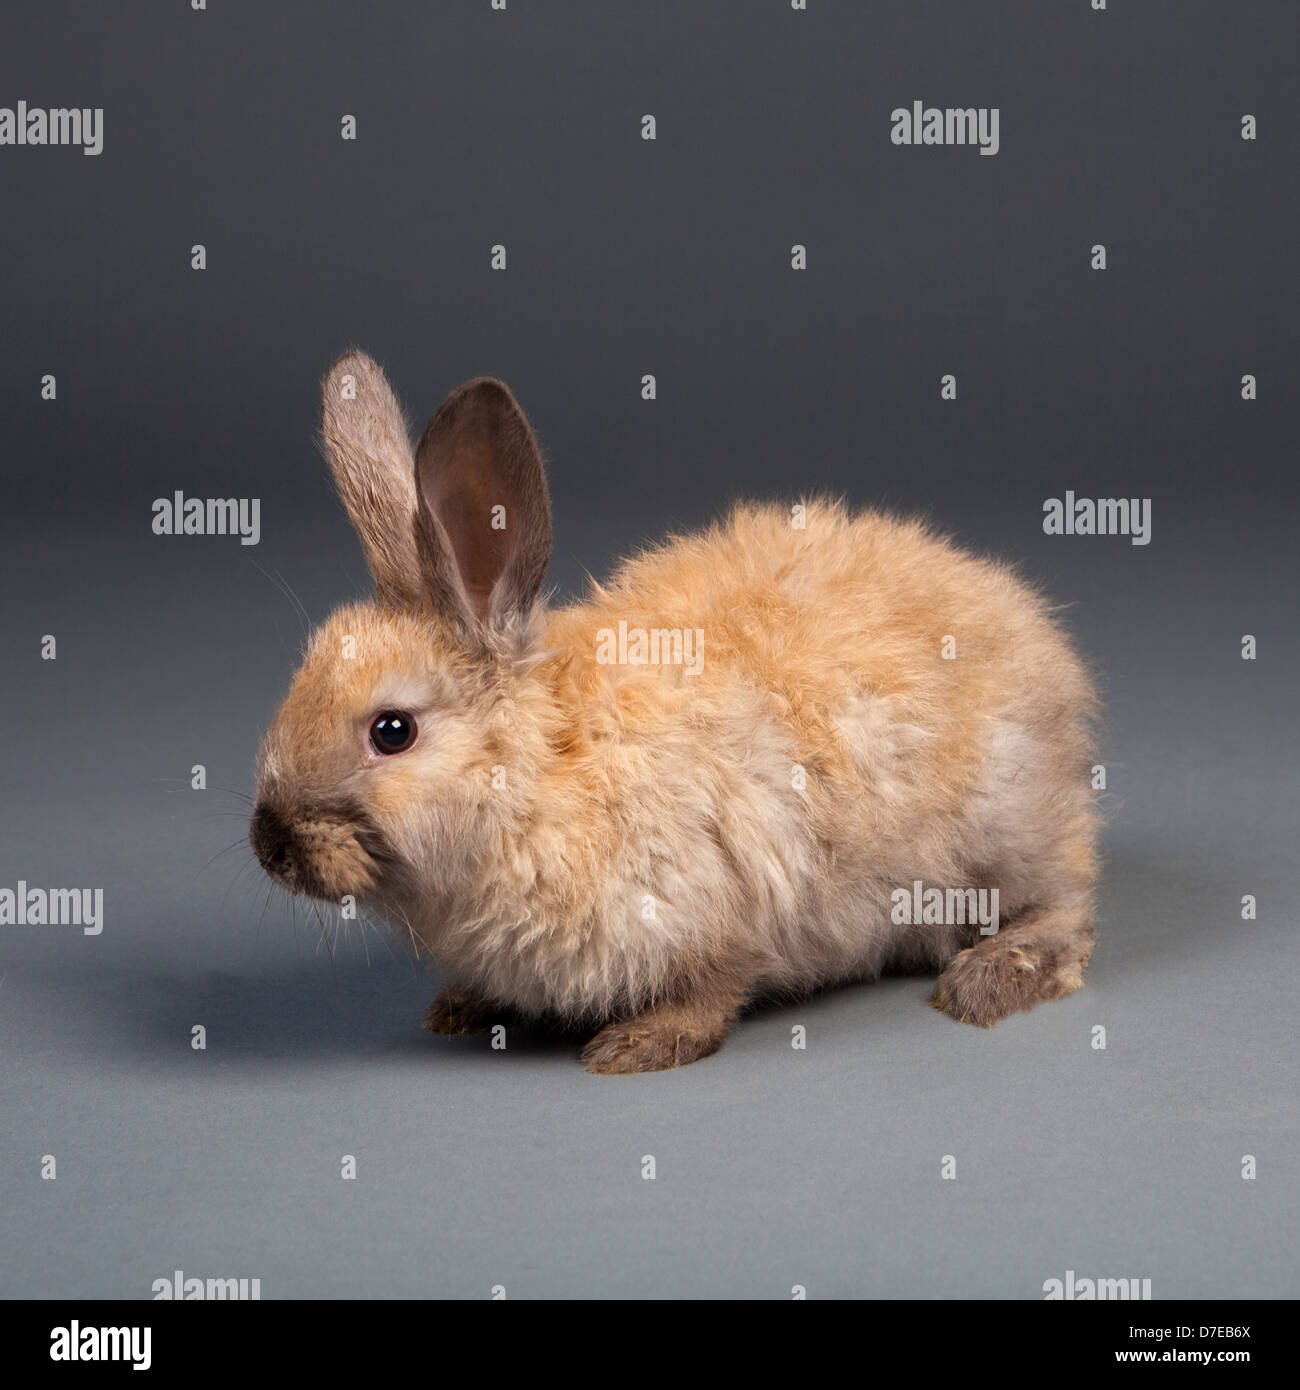 rabbit on gray background Stock Photo